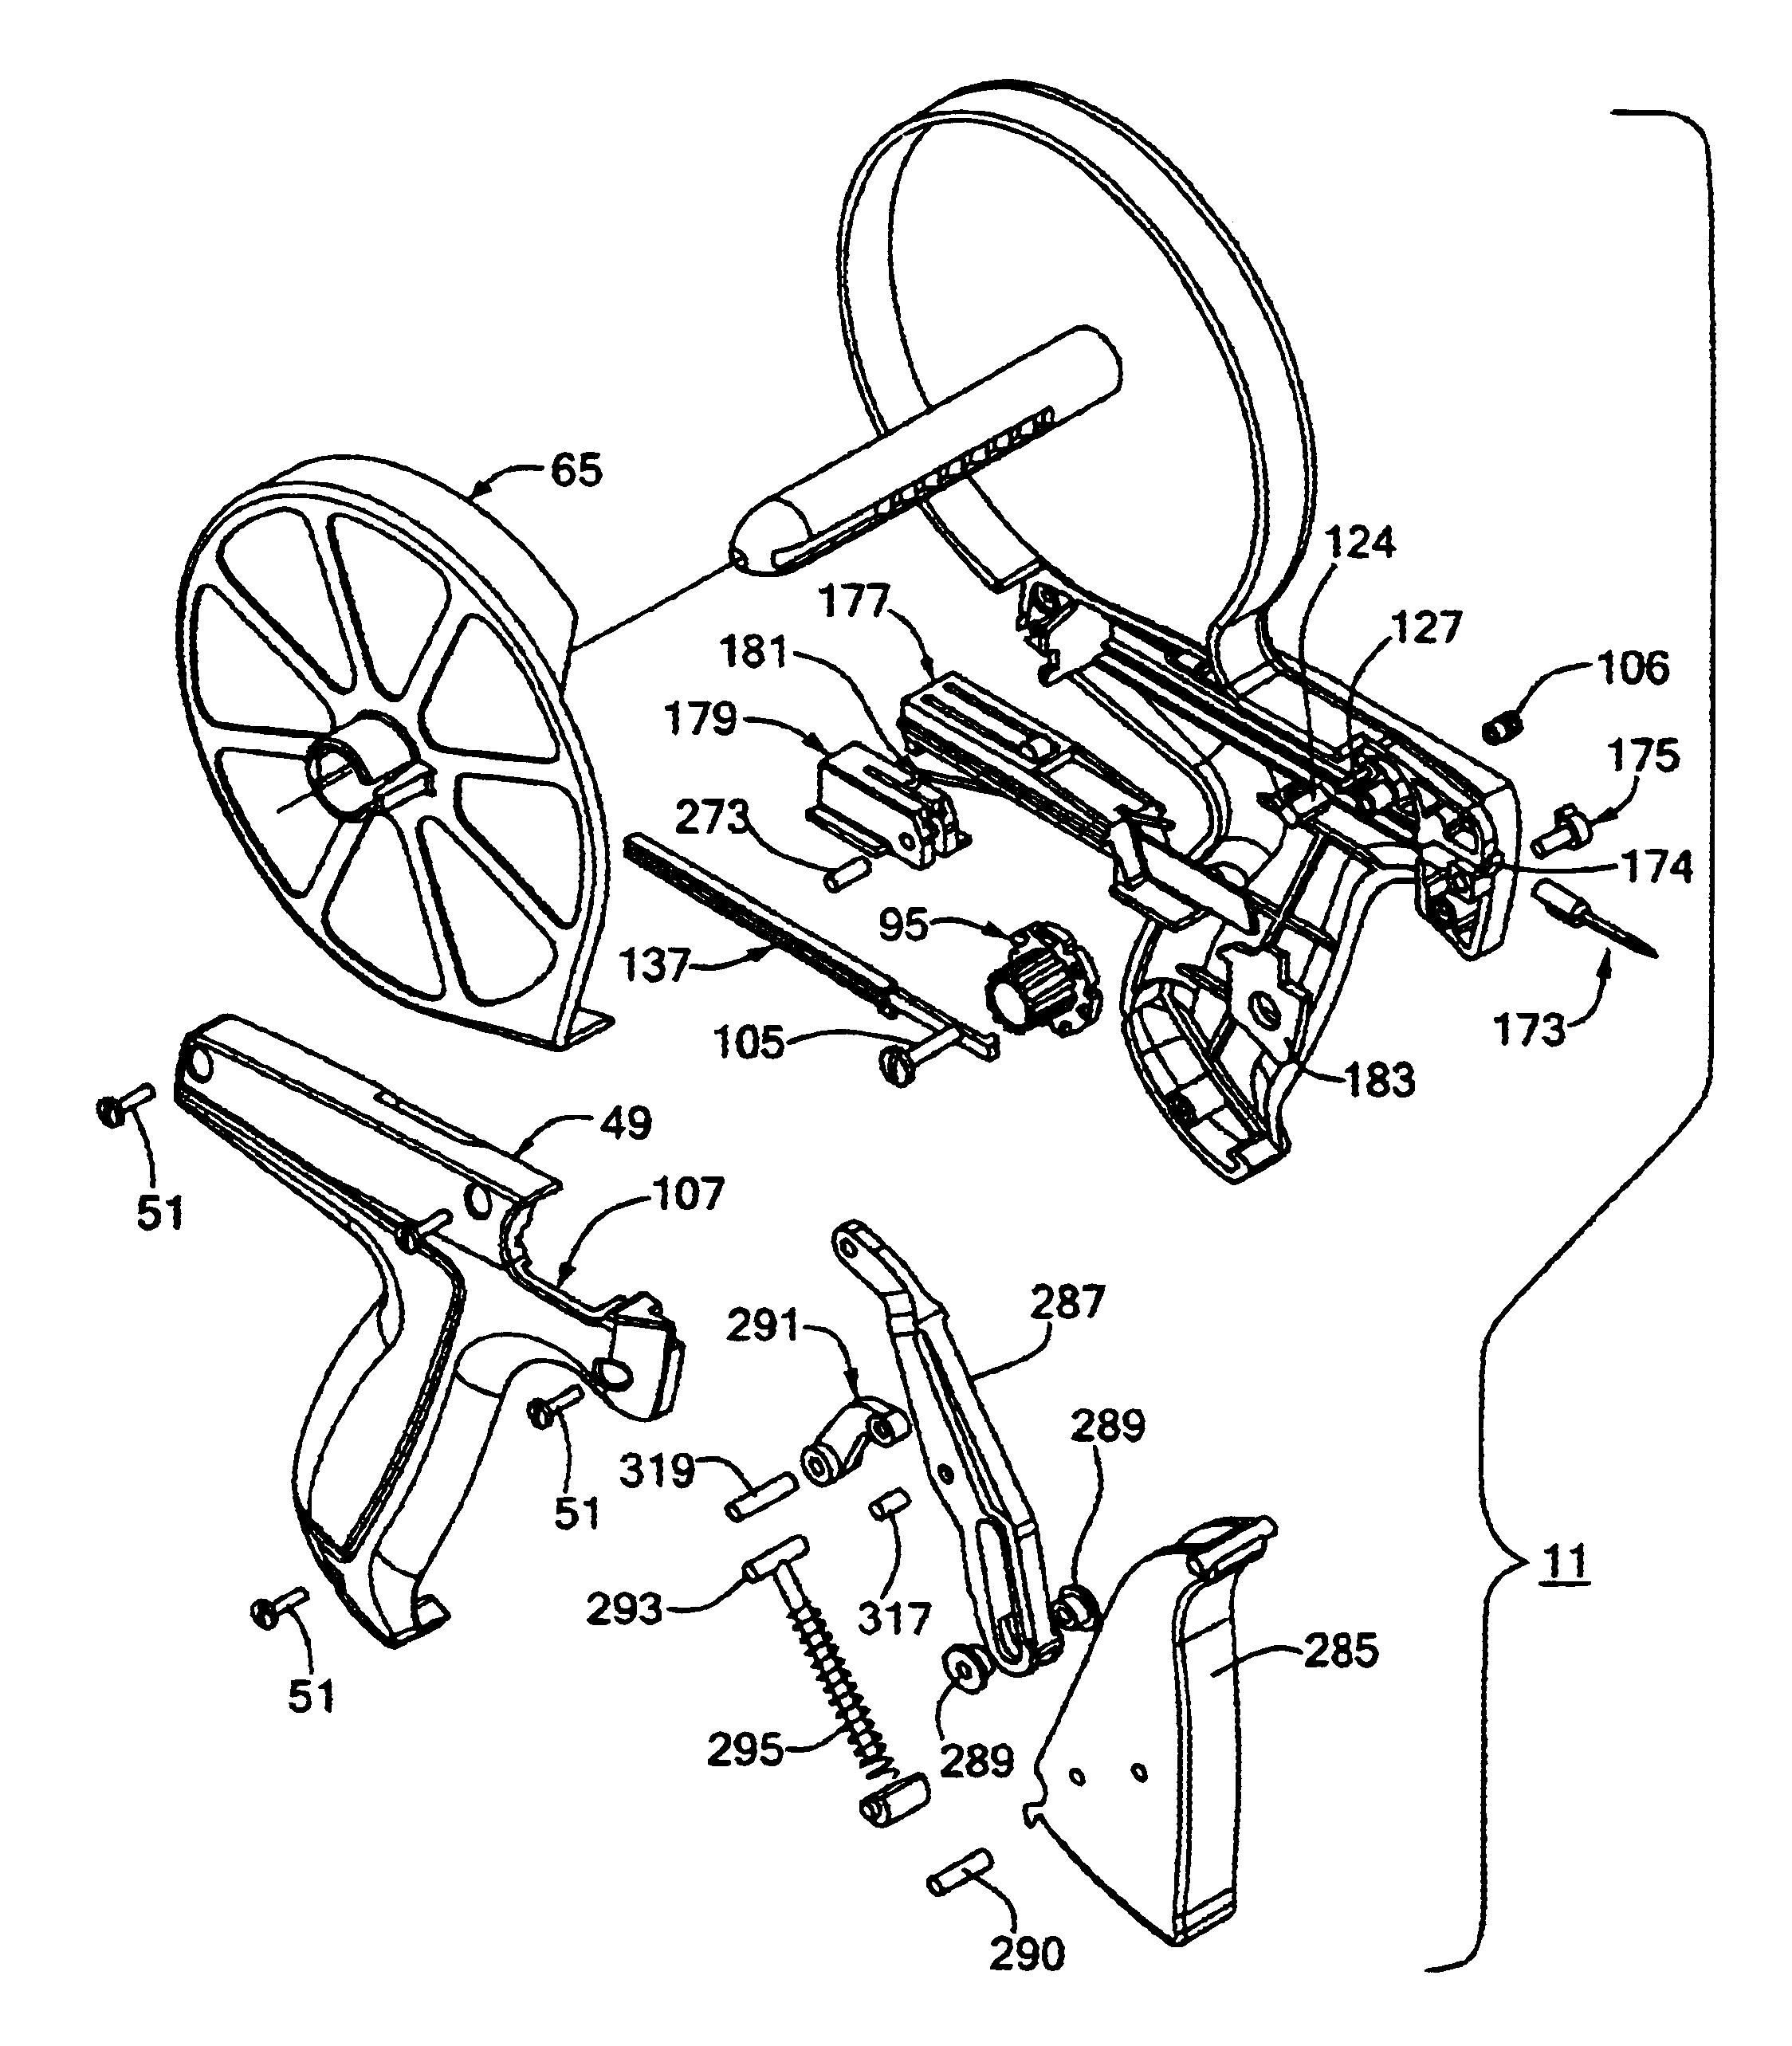 Apparatus for dispensing individual plastic fasteners from fastener stock